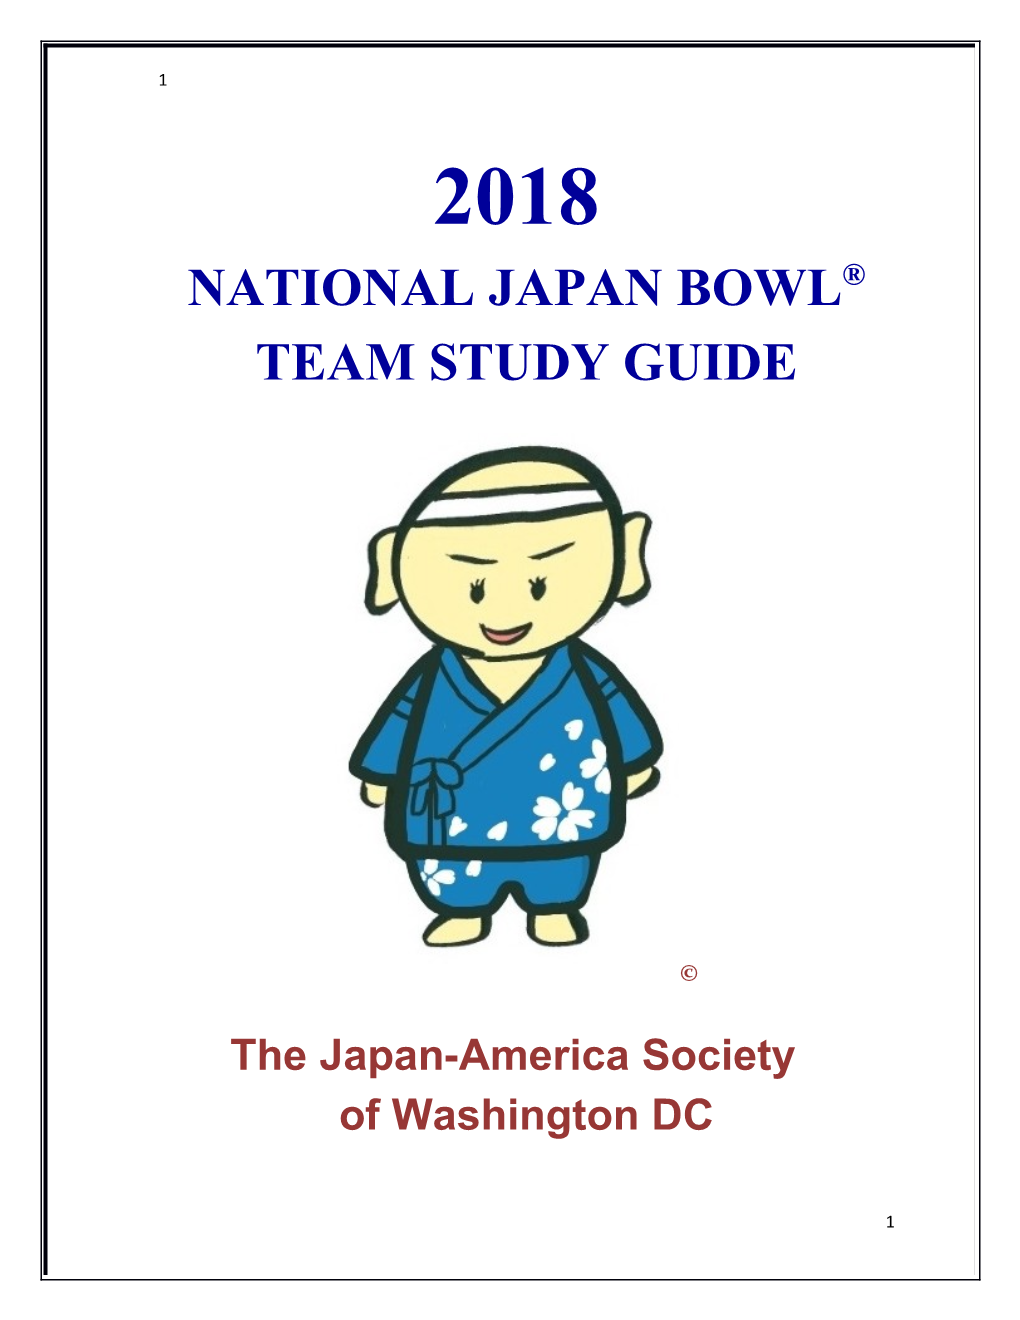 National Japan Bowl